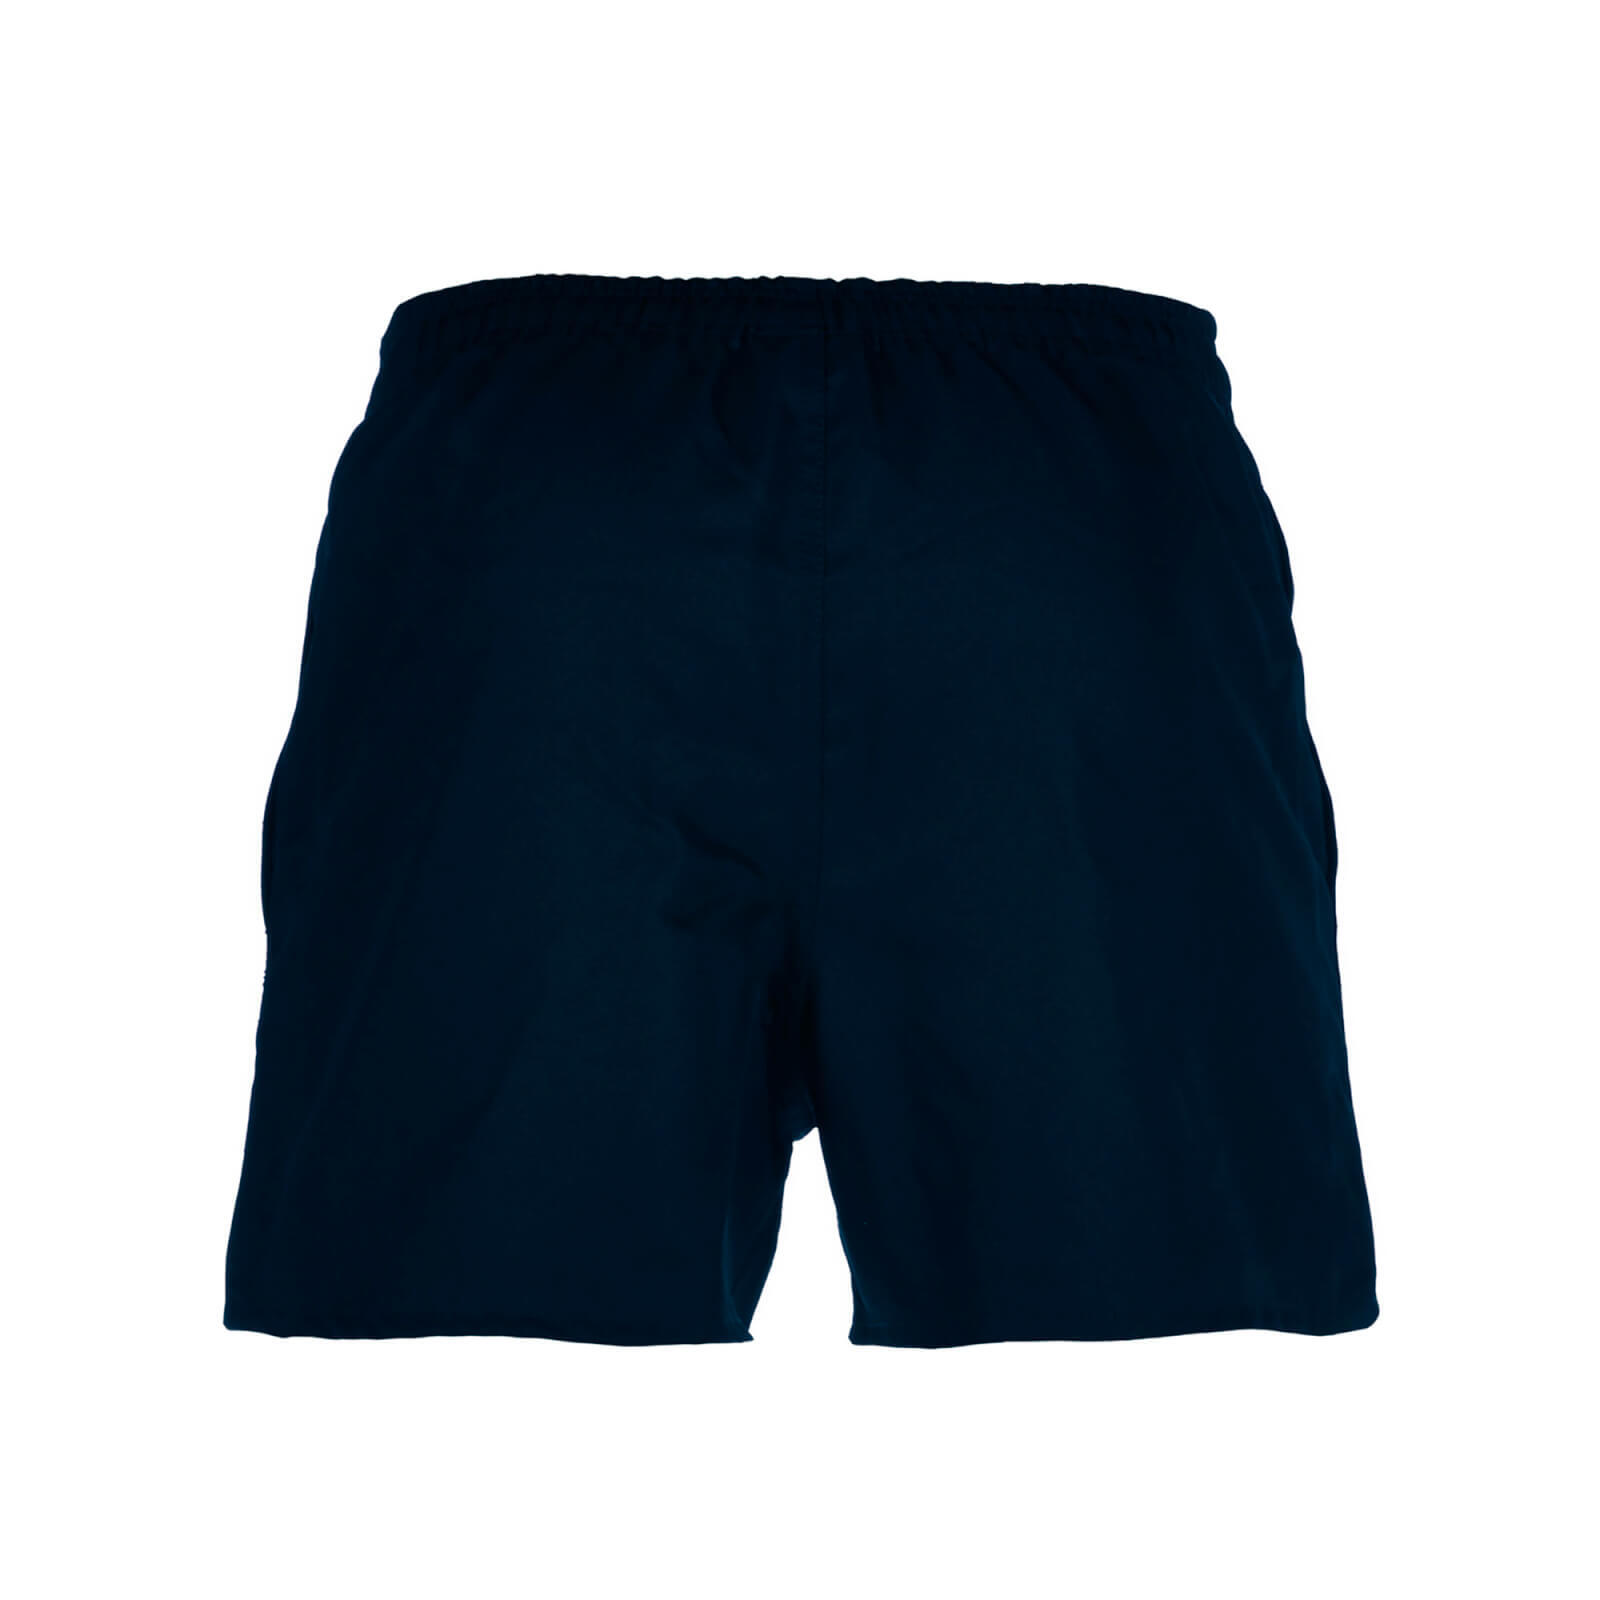 Mens Professional Polyester Shorts (Navy) 2/4